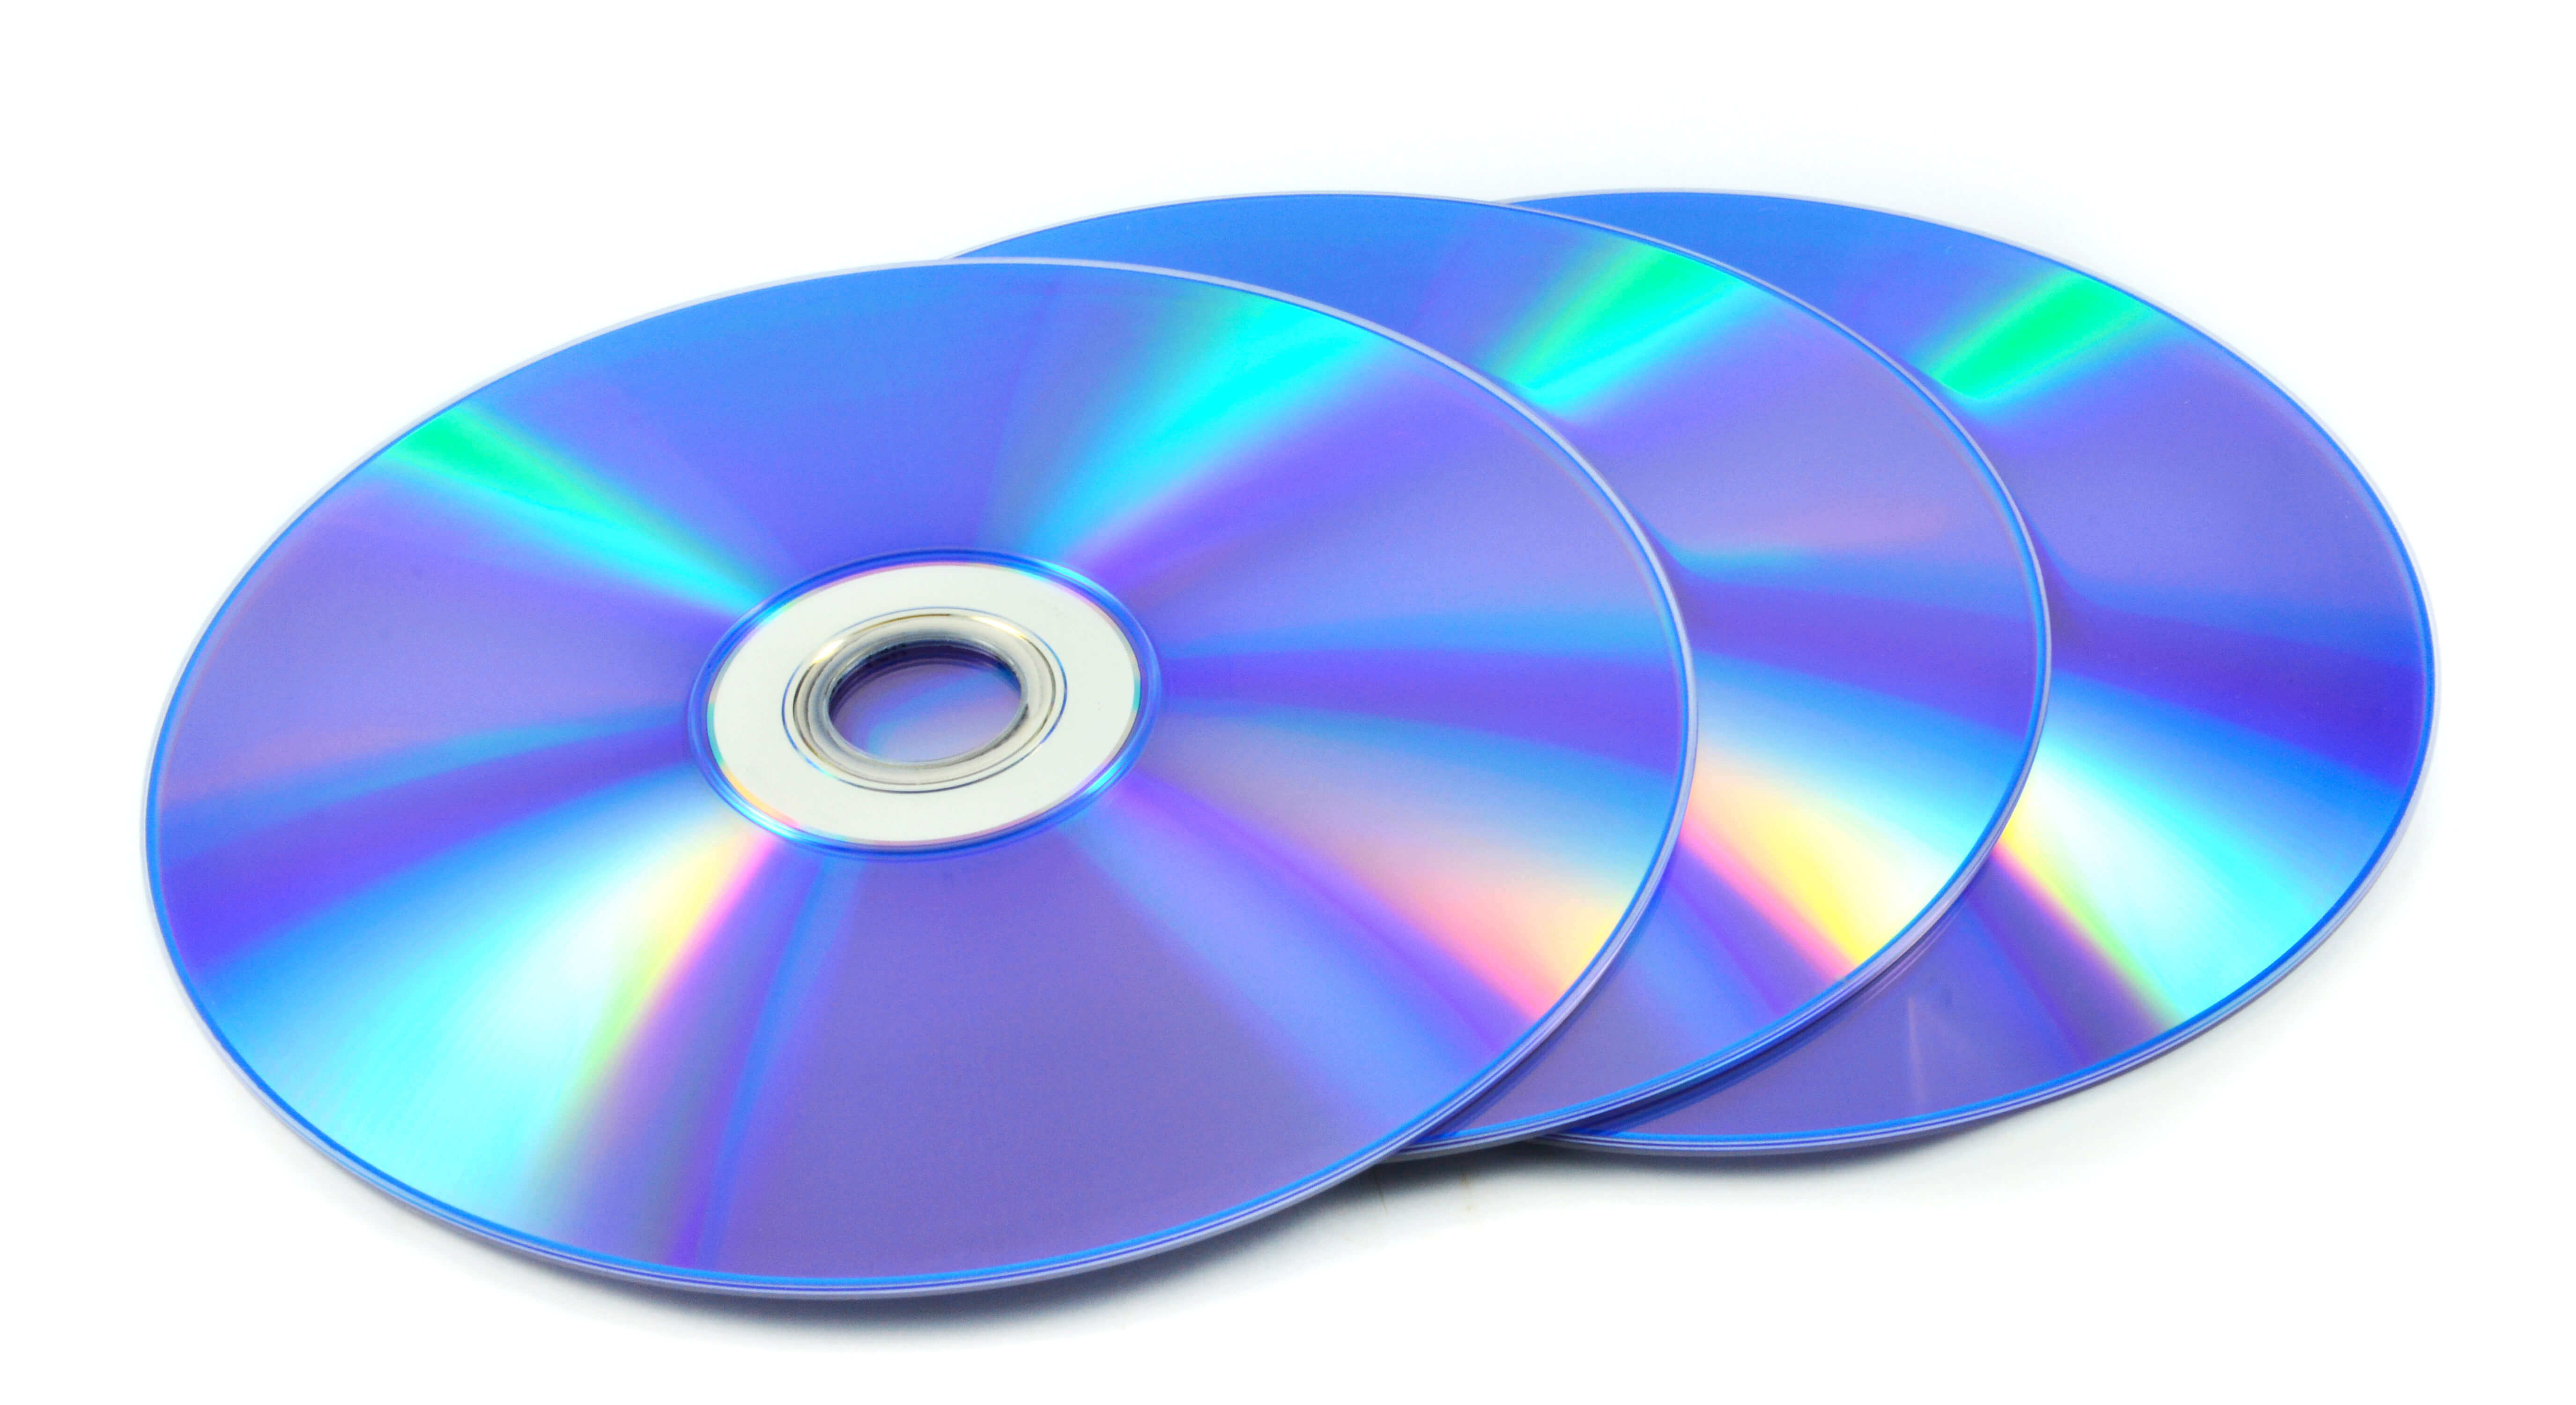 CD, DVD & Blu-Ray